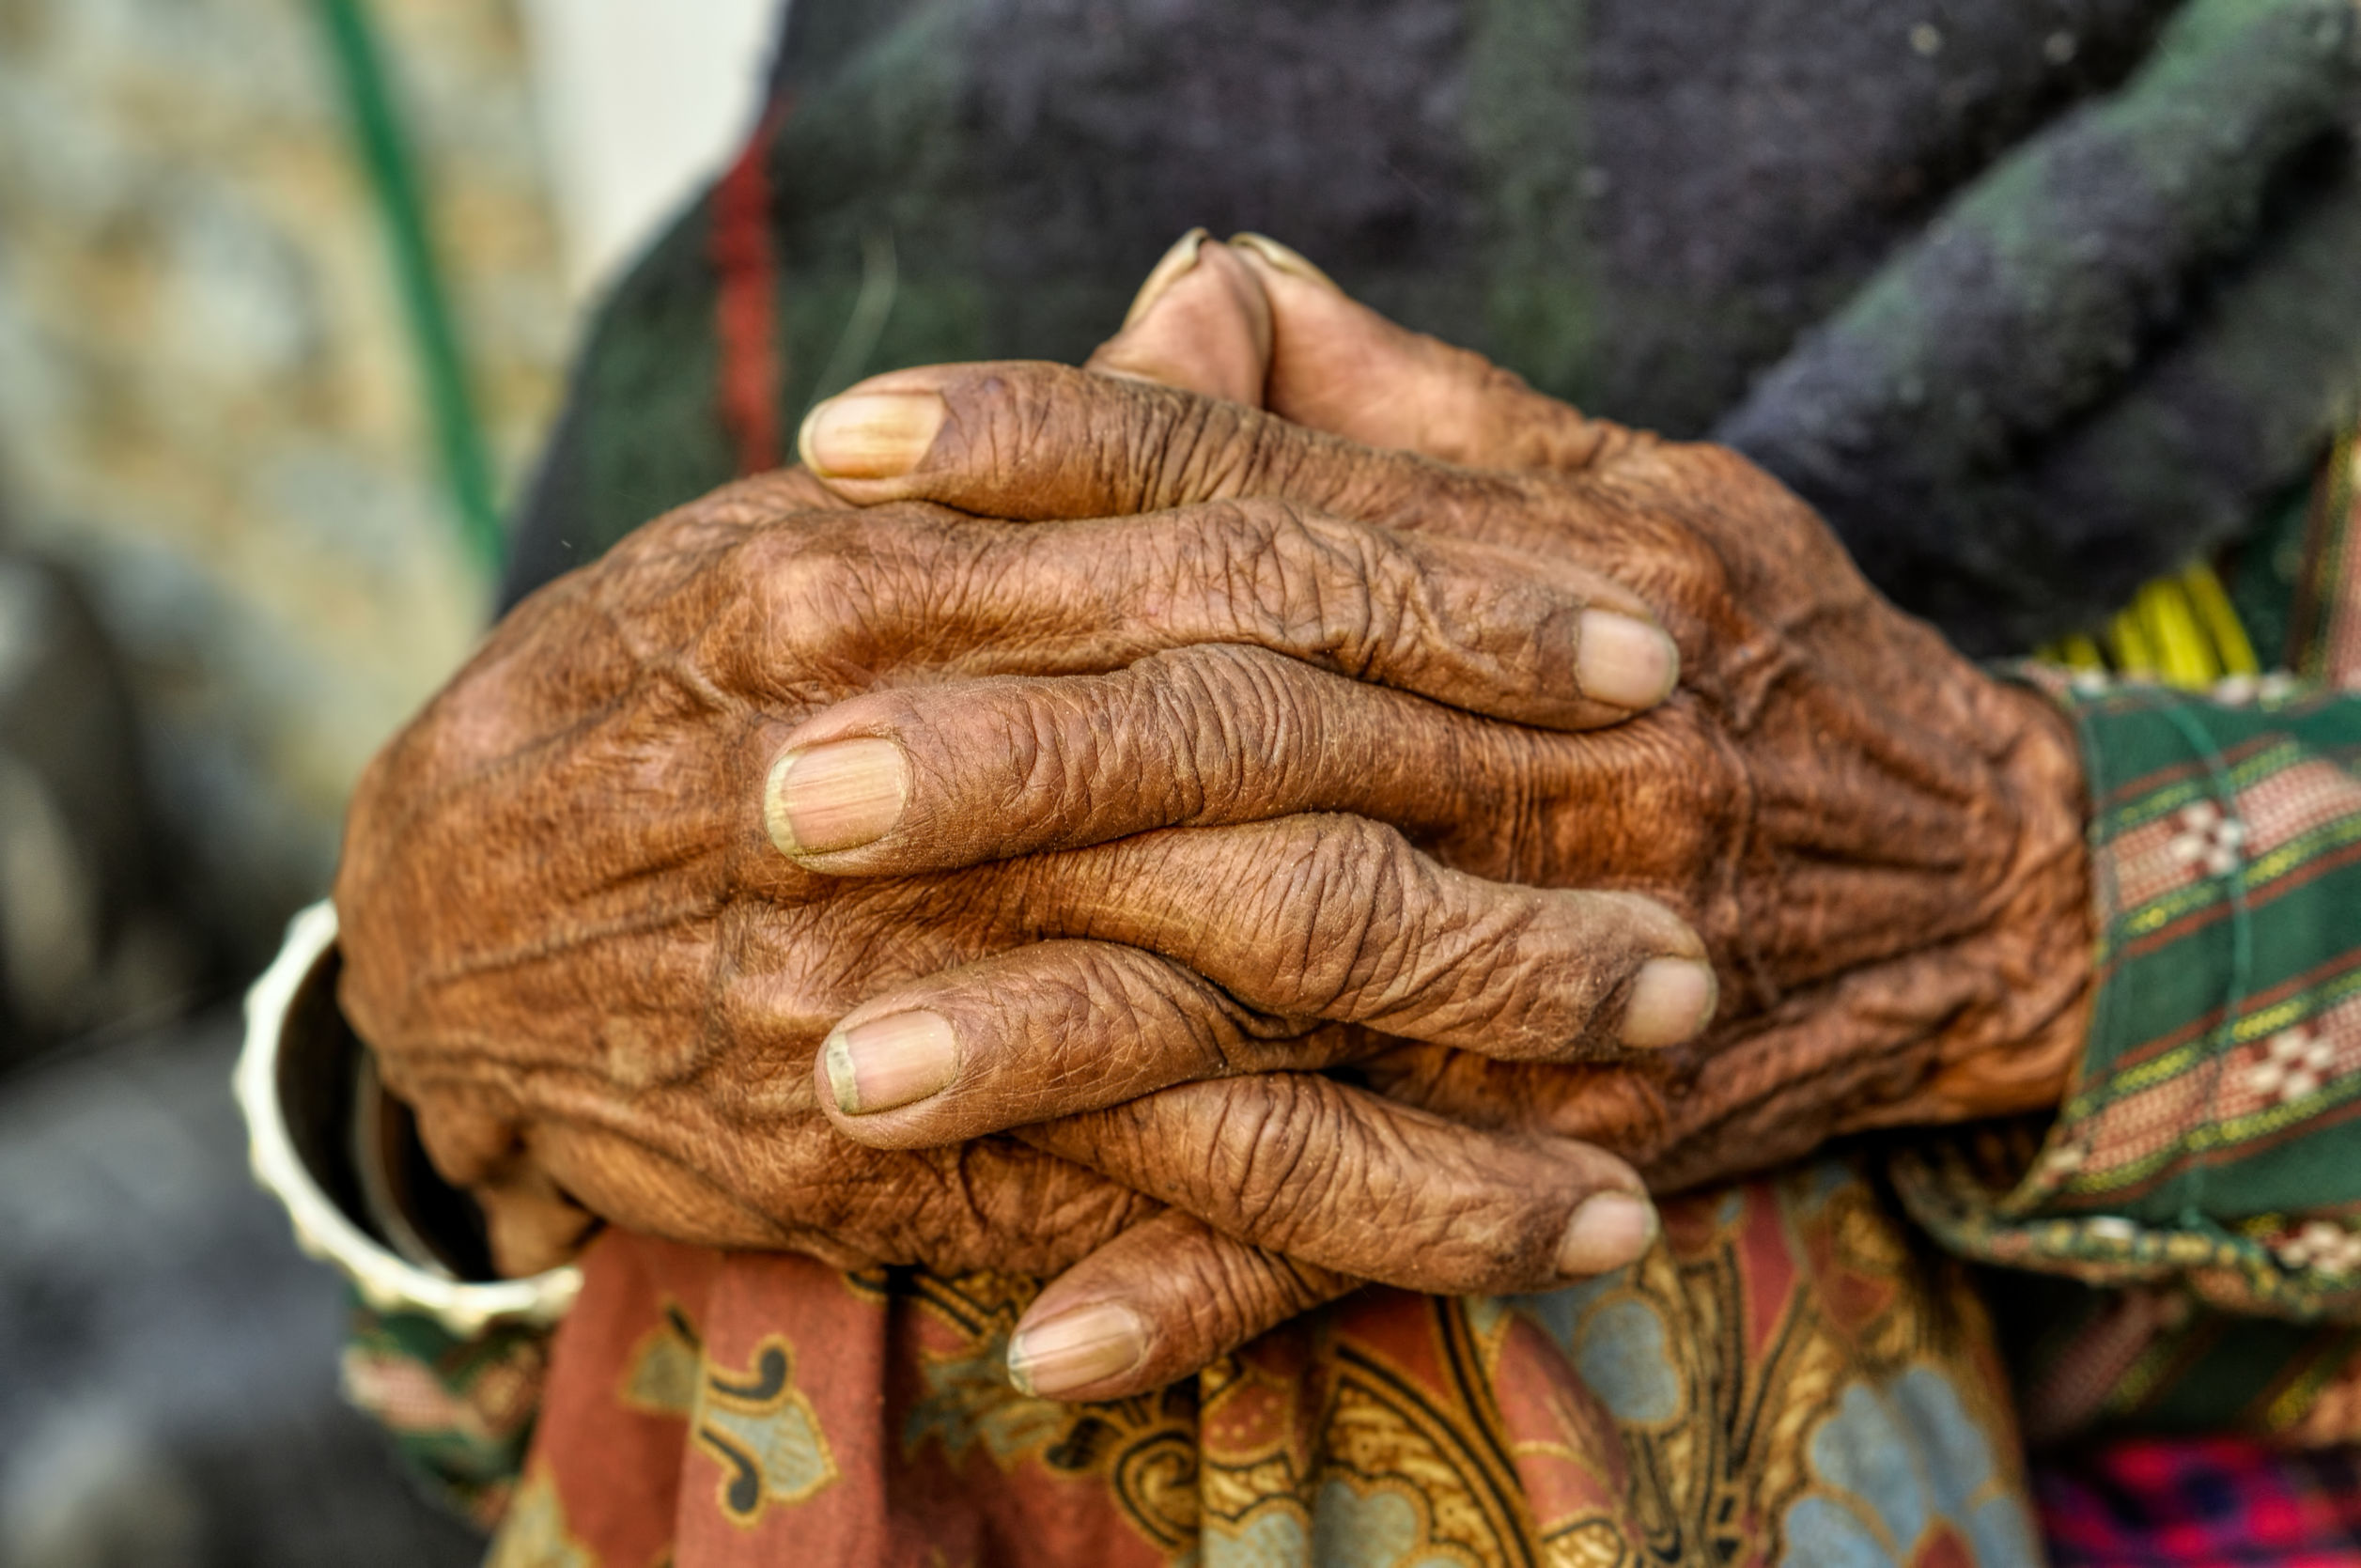 Wrinkled hands of a dark-skinned woman